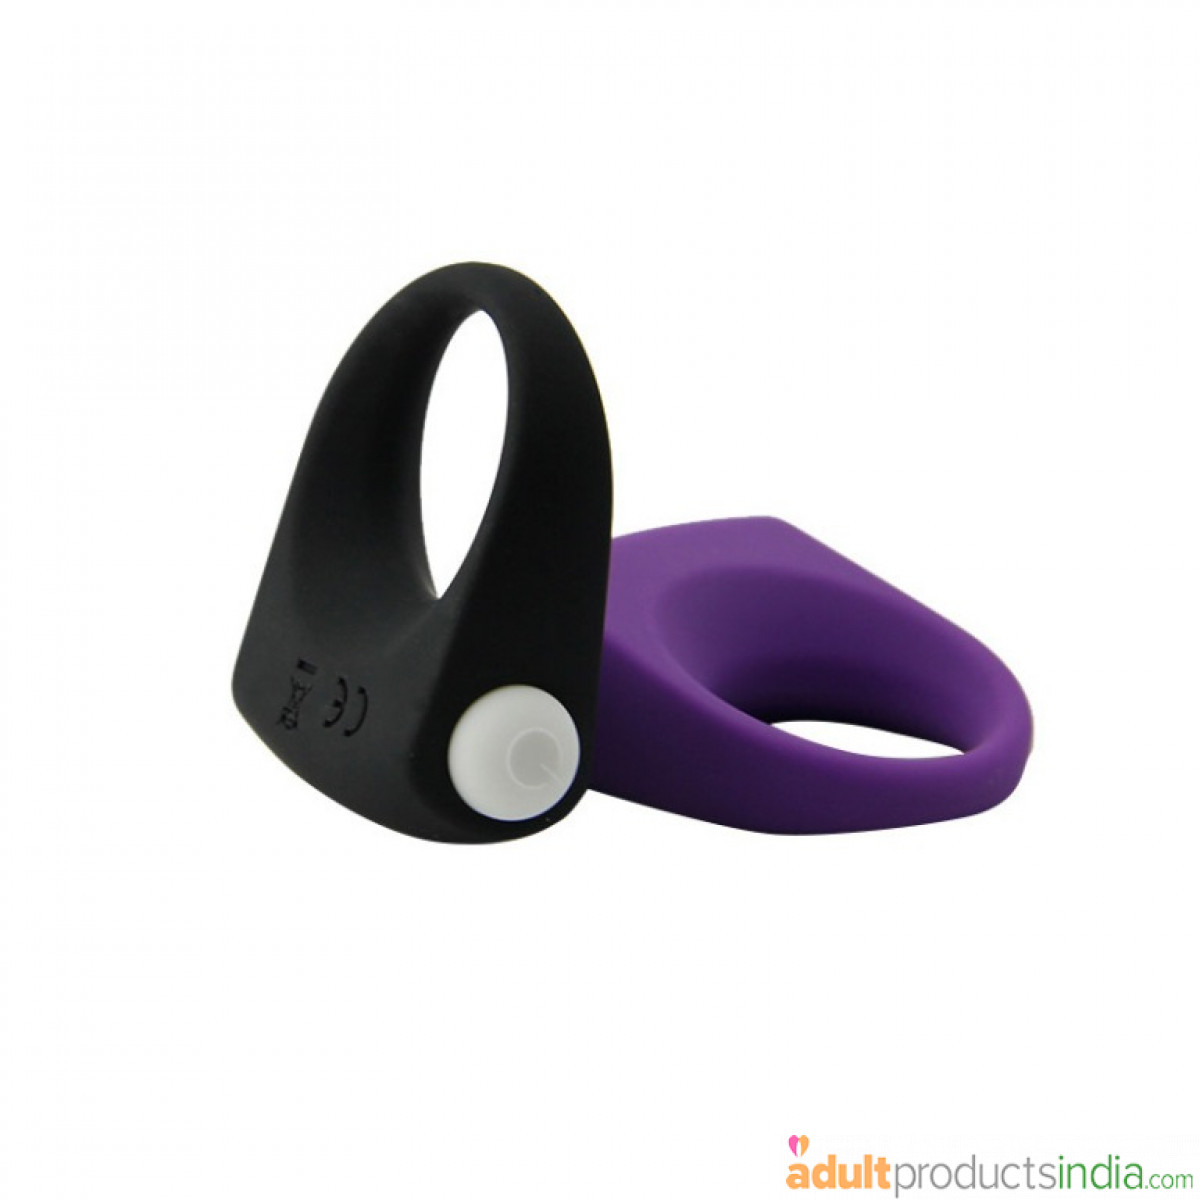 Luxury Vibrating Cock Ring - Black & Purple